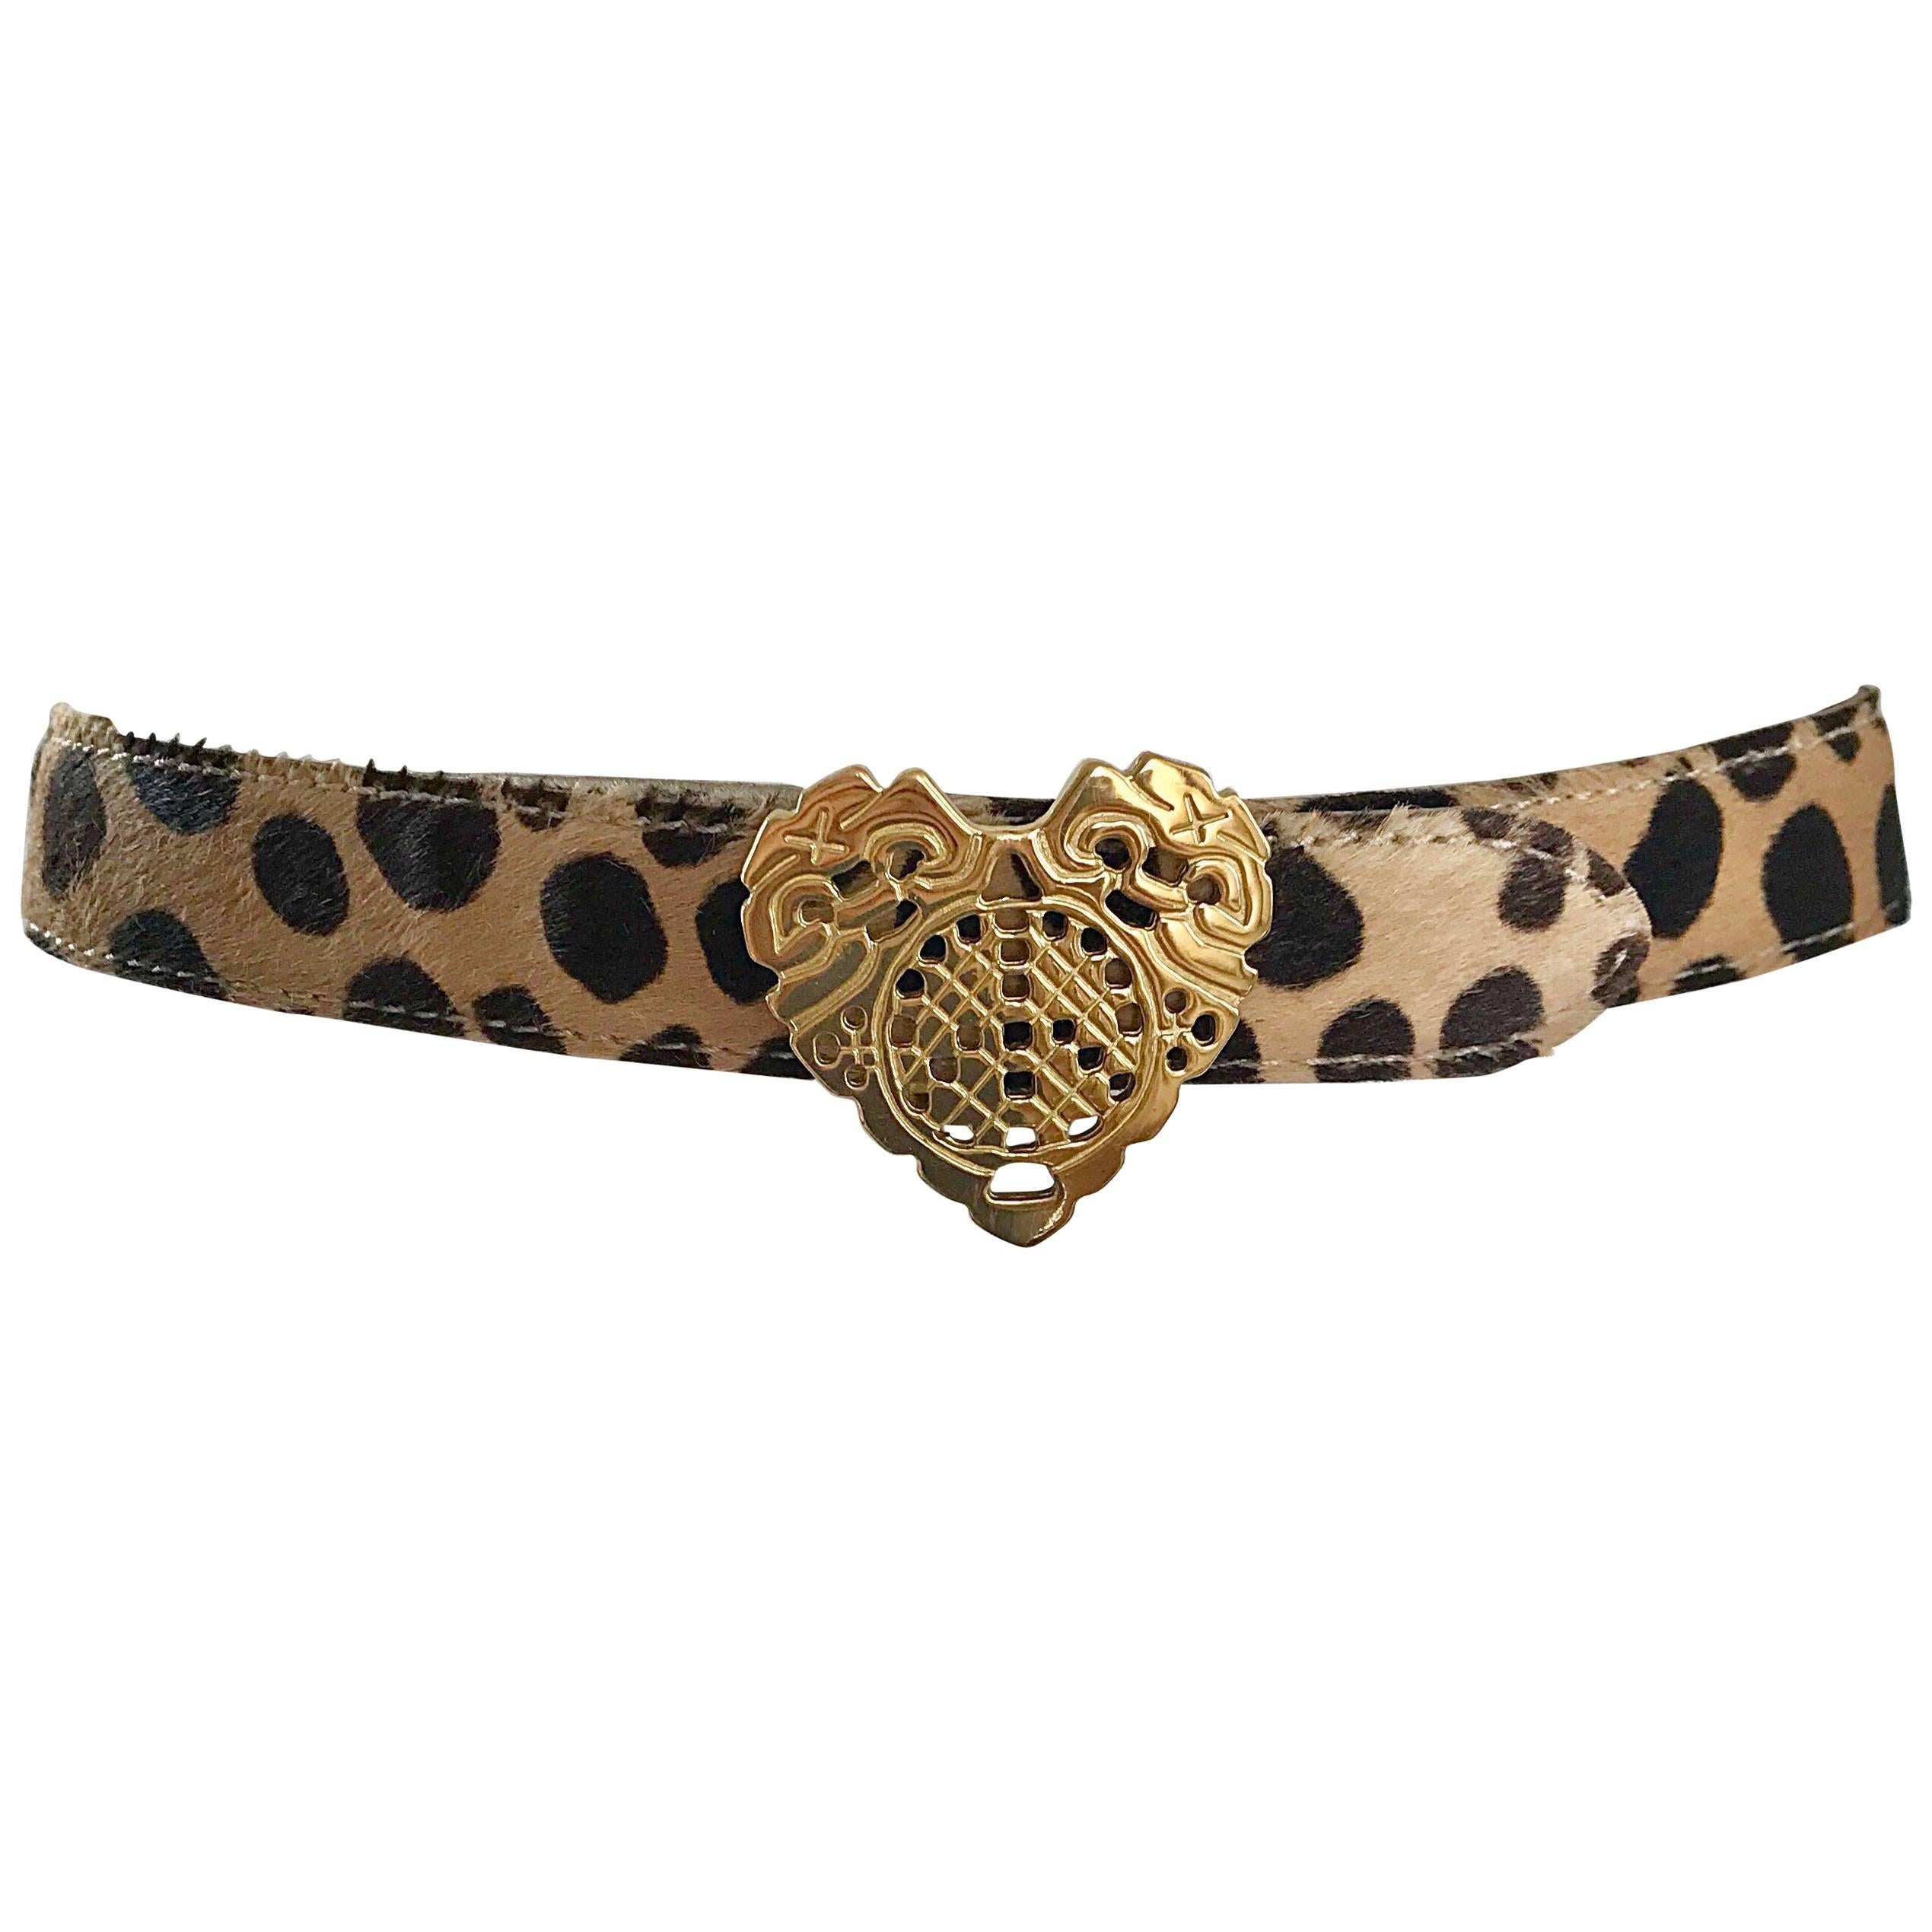 Vintage Moschino Cheap & Chic 1990s Calf Hair Leopard Print Heart Buckle Belt